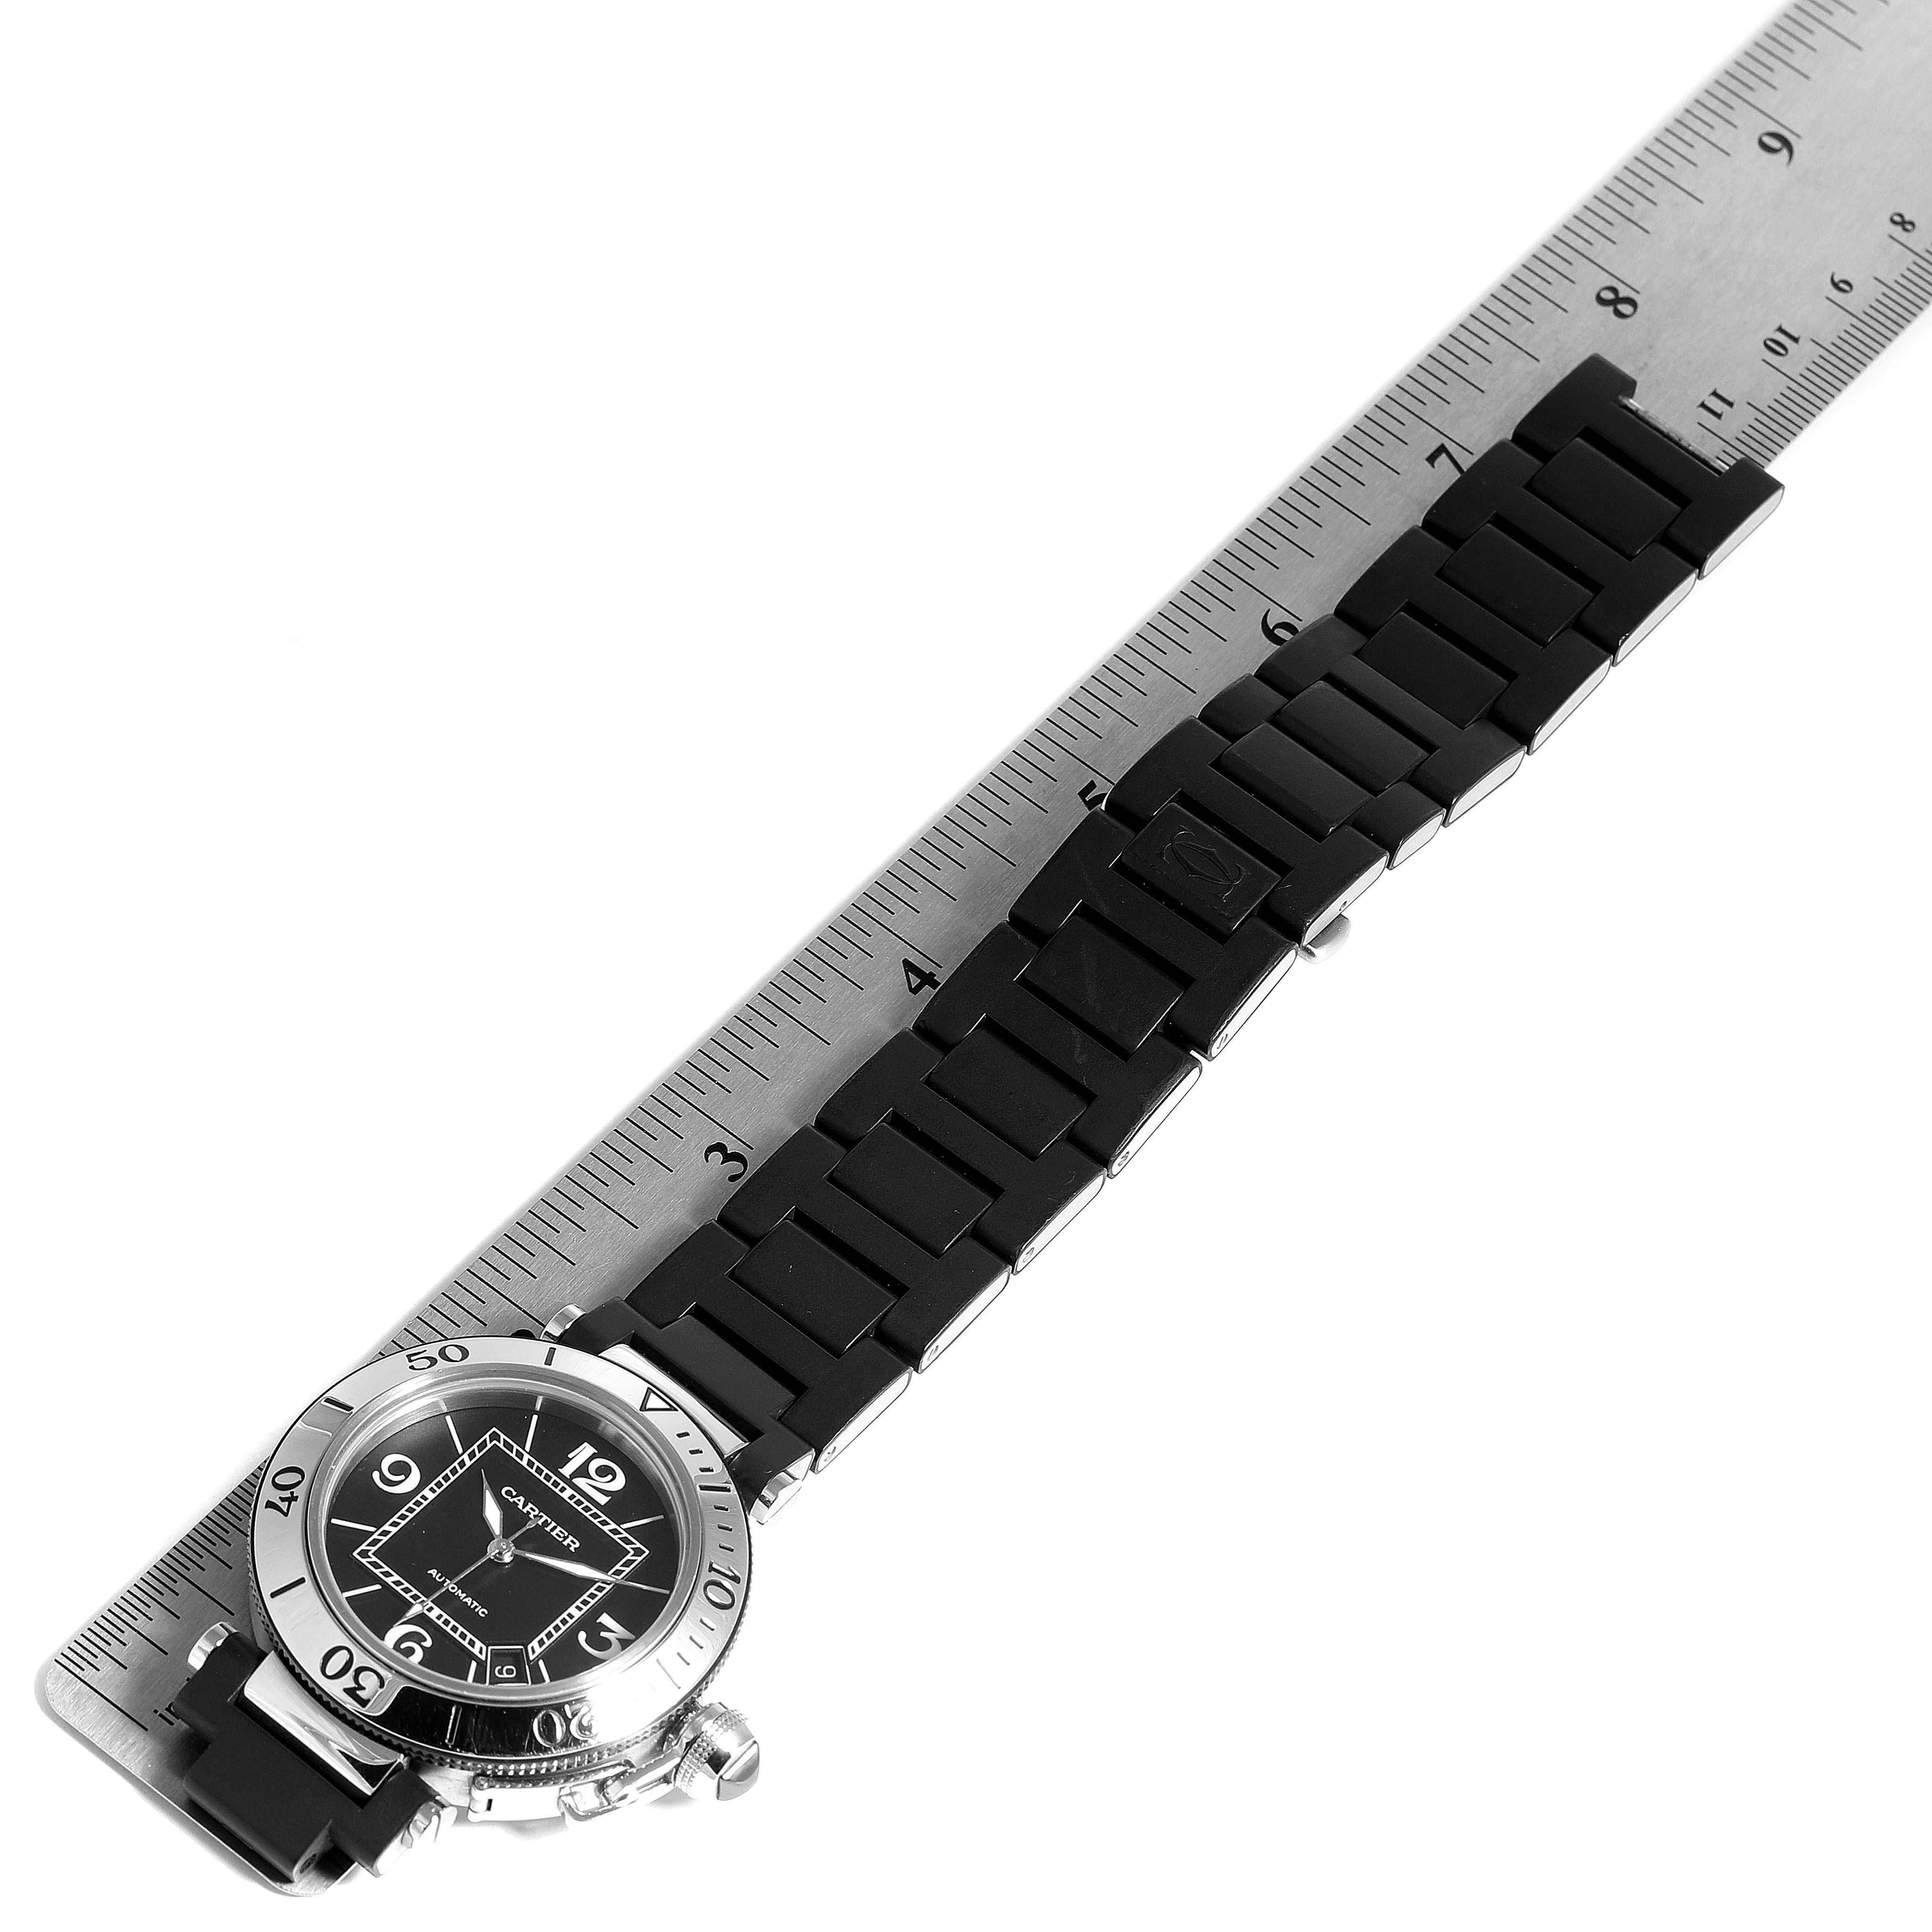 Cartier Pasha Seatimer Chronograph Rubber Strap Watch W31088U2 Box 1